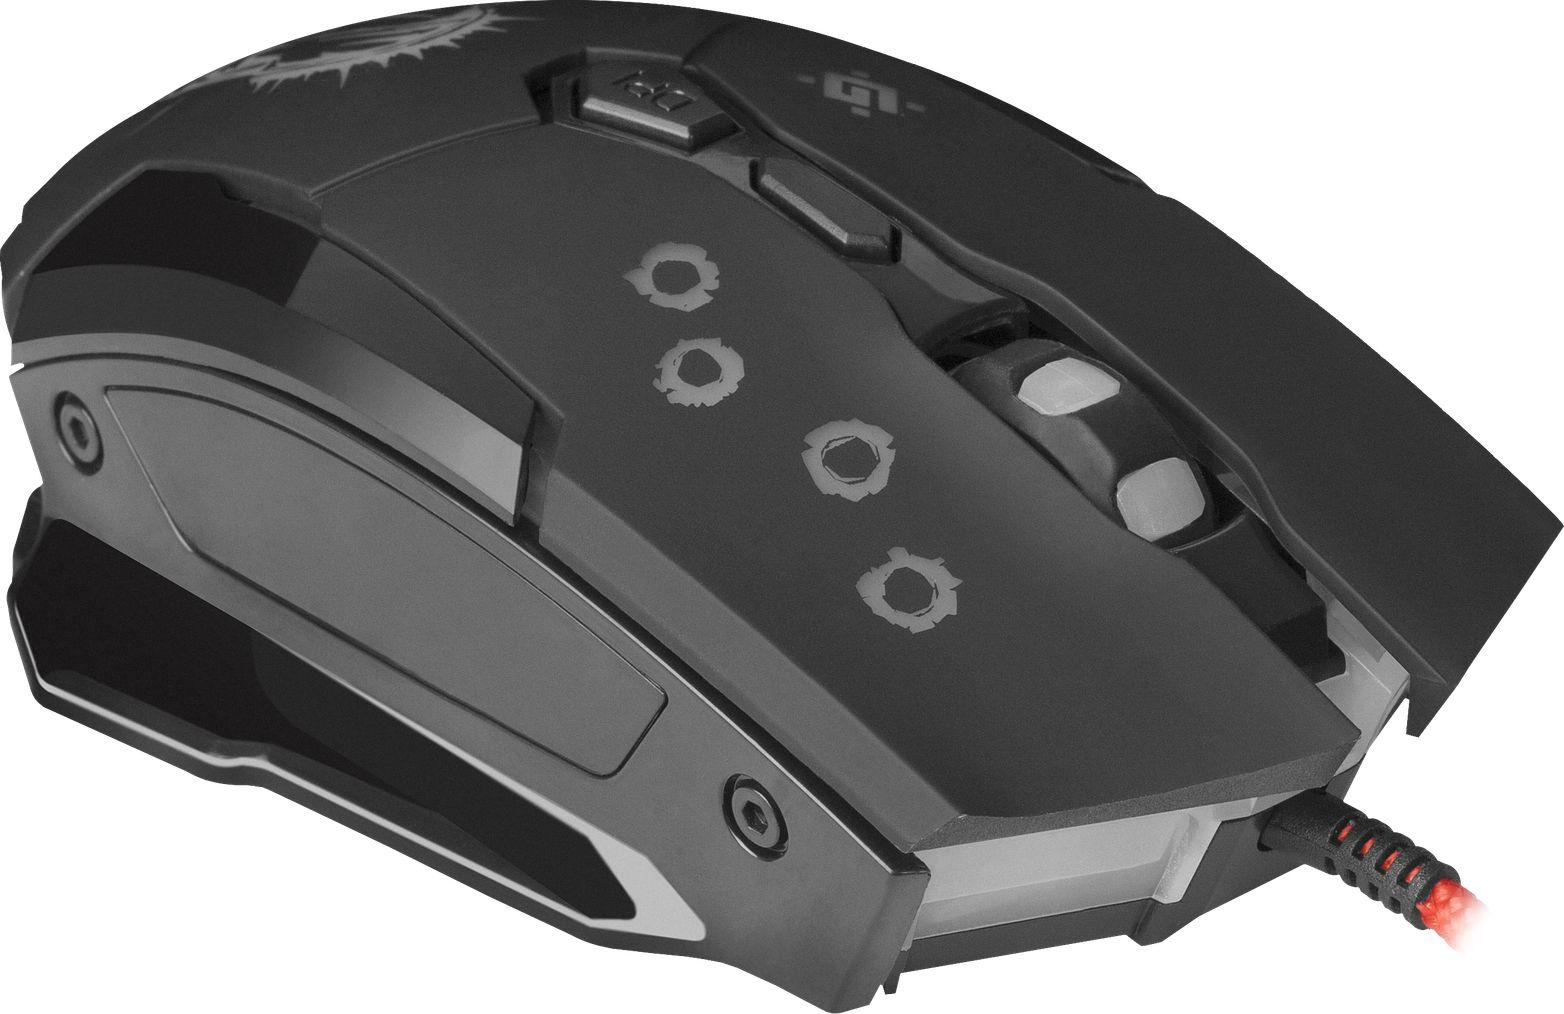 Defender Killer GM-170L mouse Ambidextrous USB Type-A Optical 3200 DPI